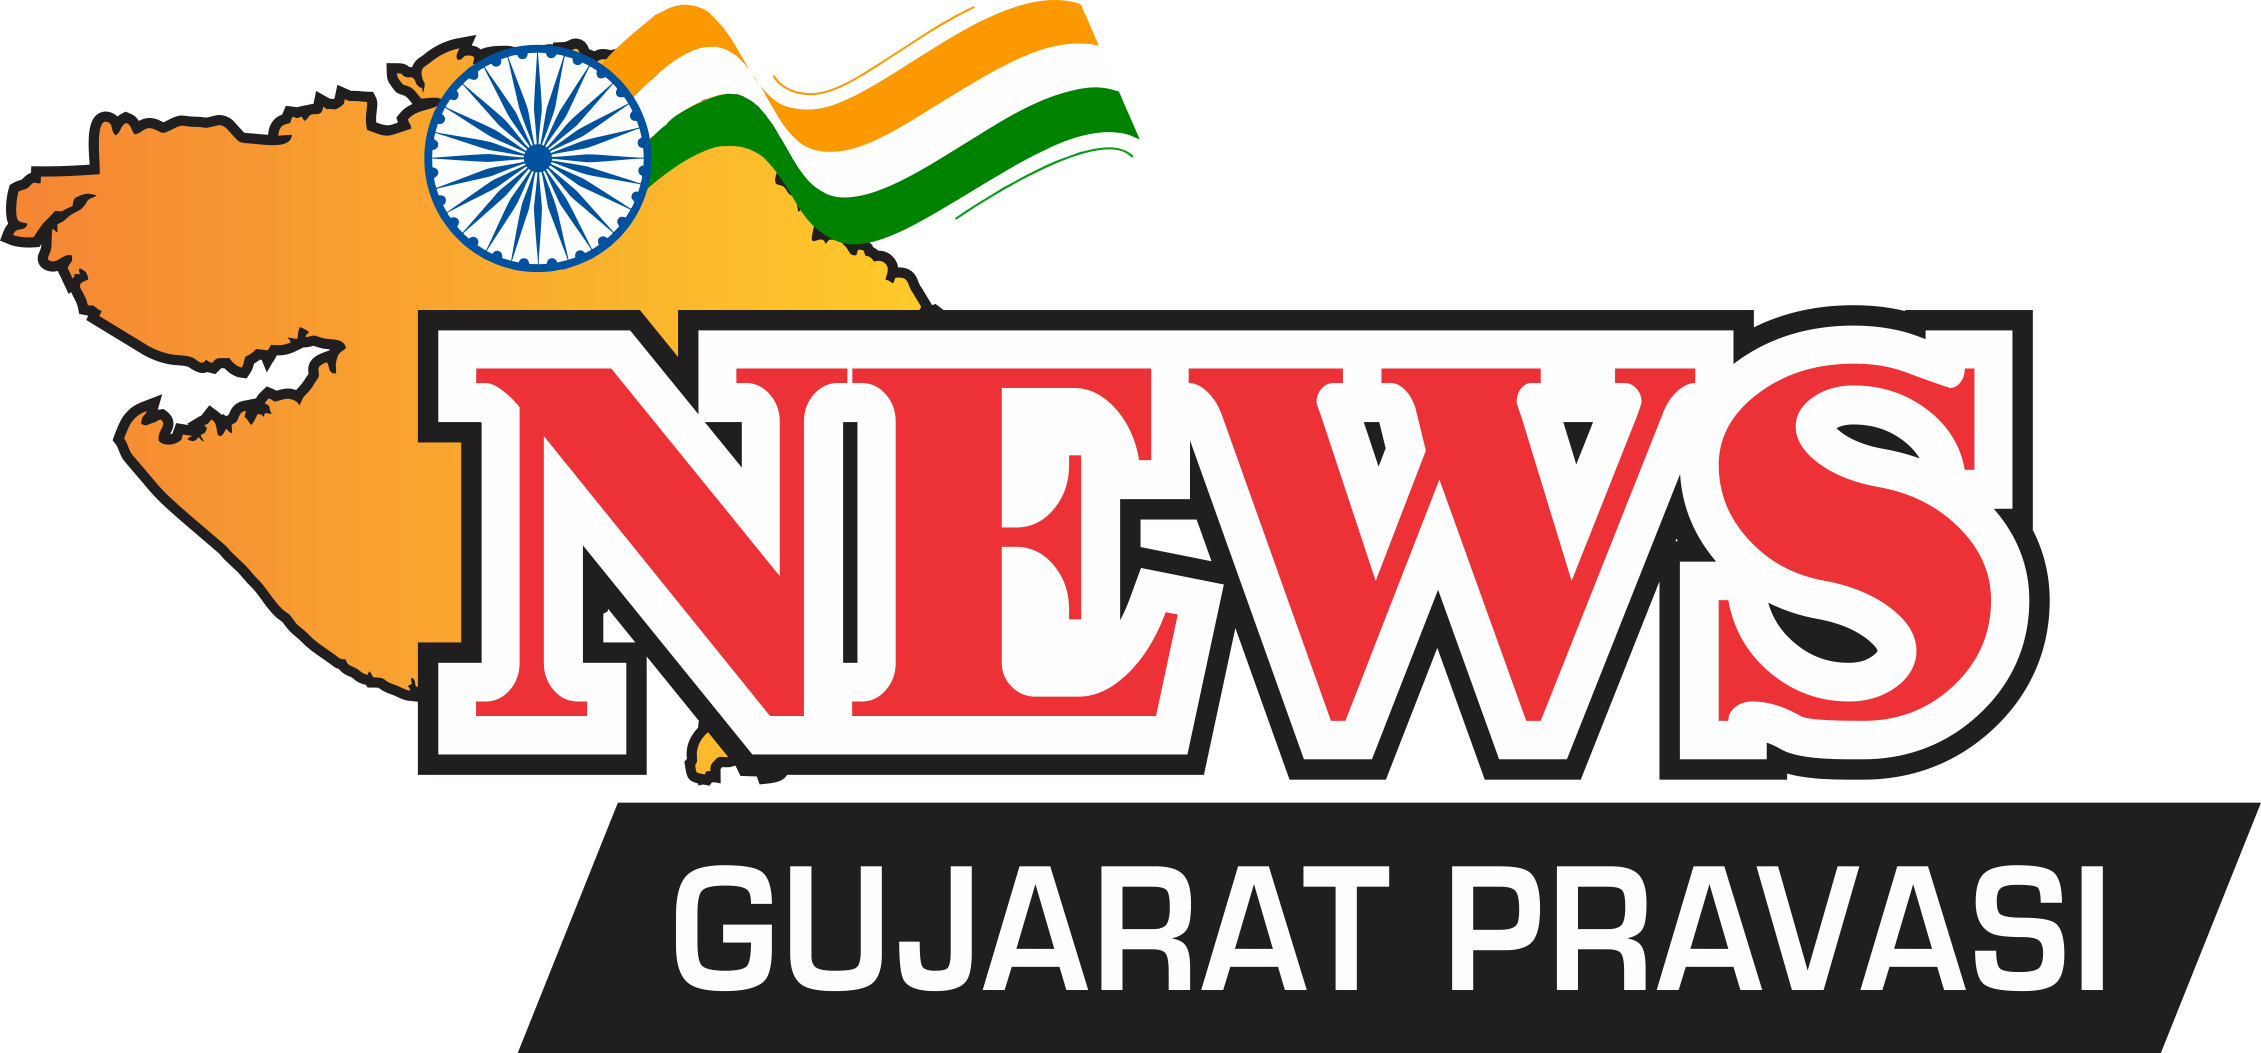 Gujarat Pravasi News